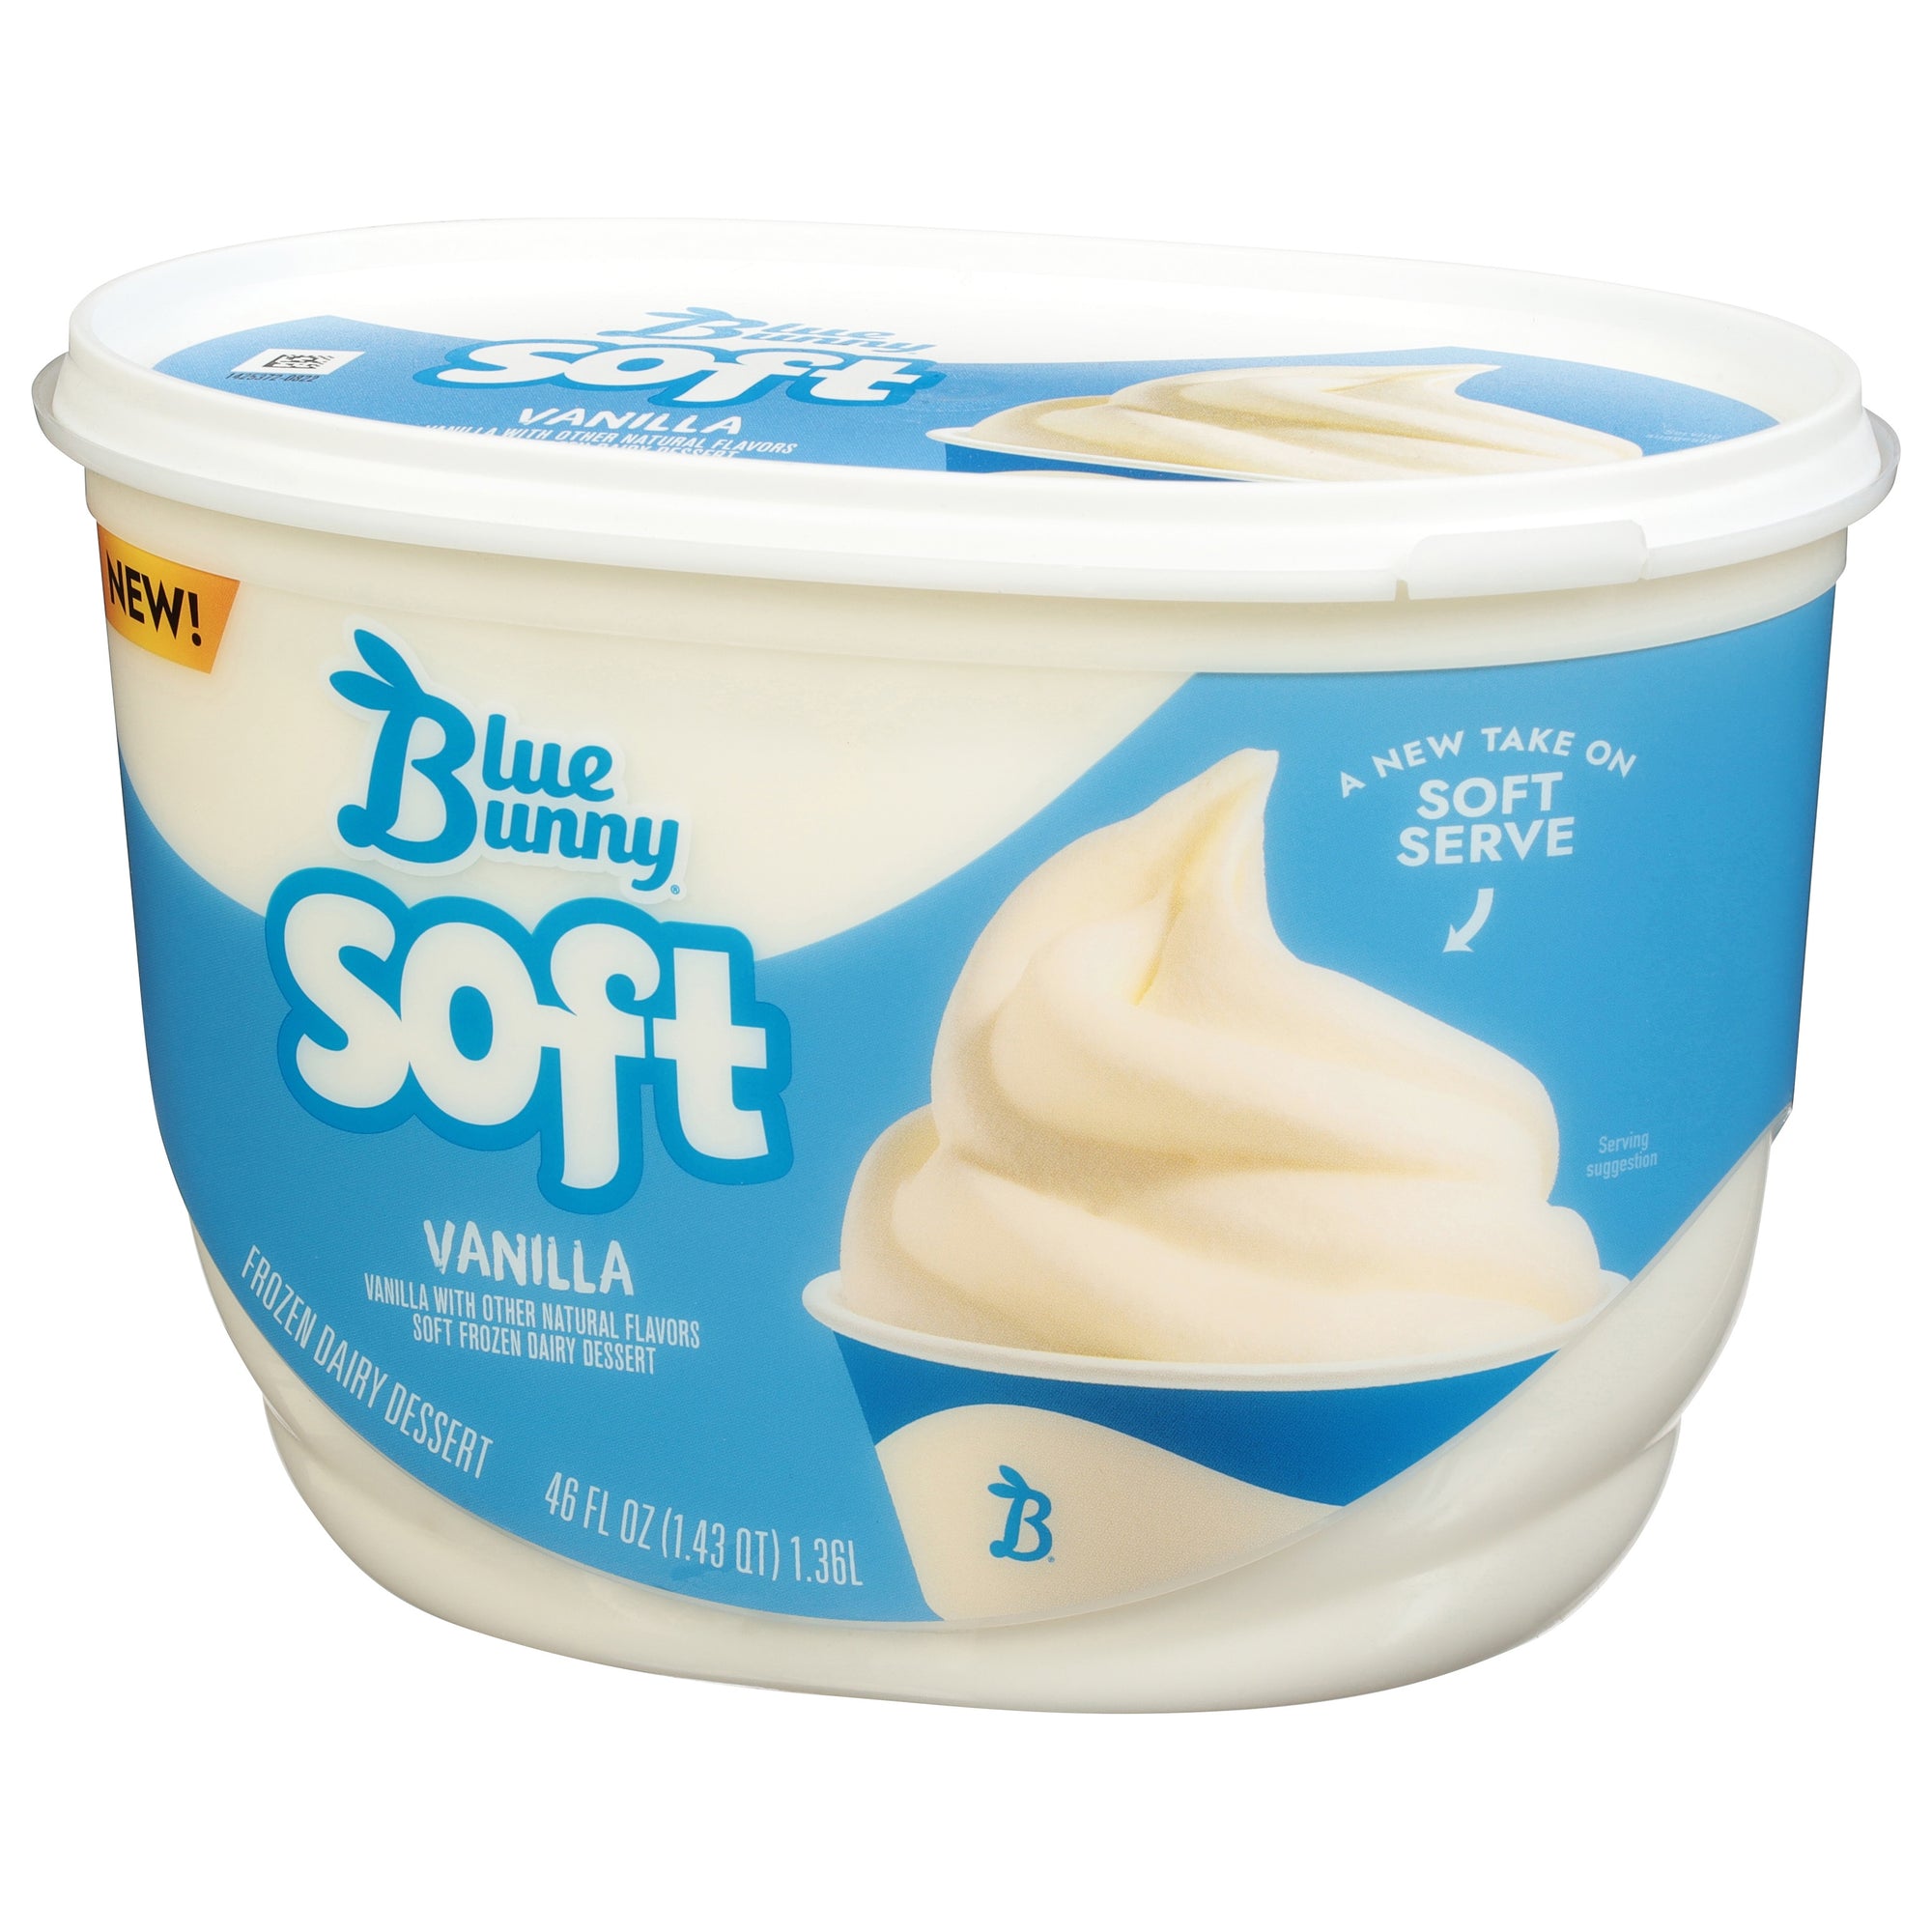 Blue Bunny Soft Ice Cream Vanilla 1.5 qt